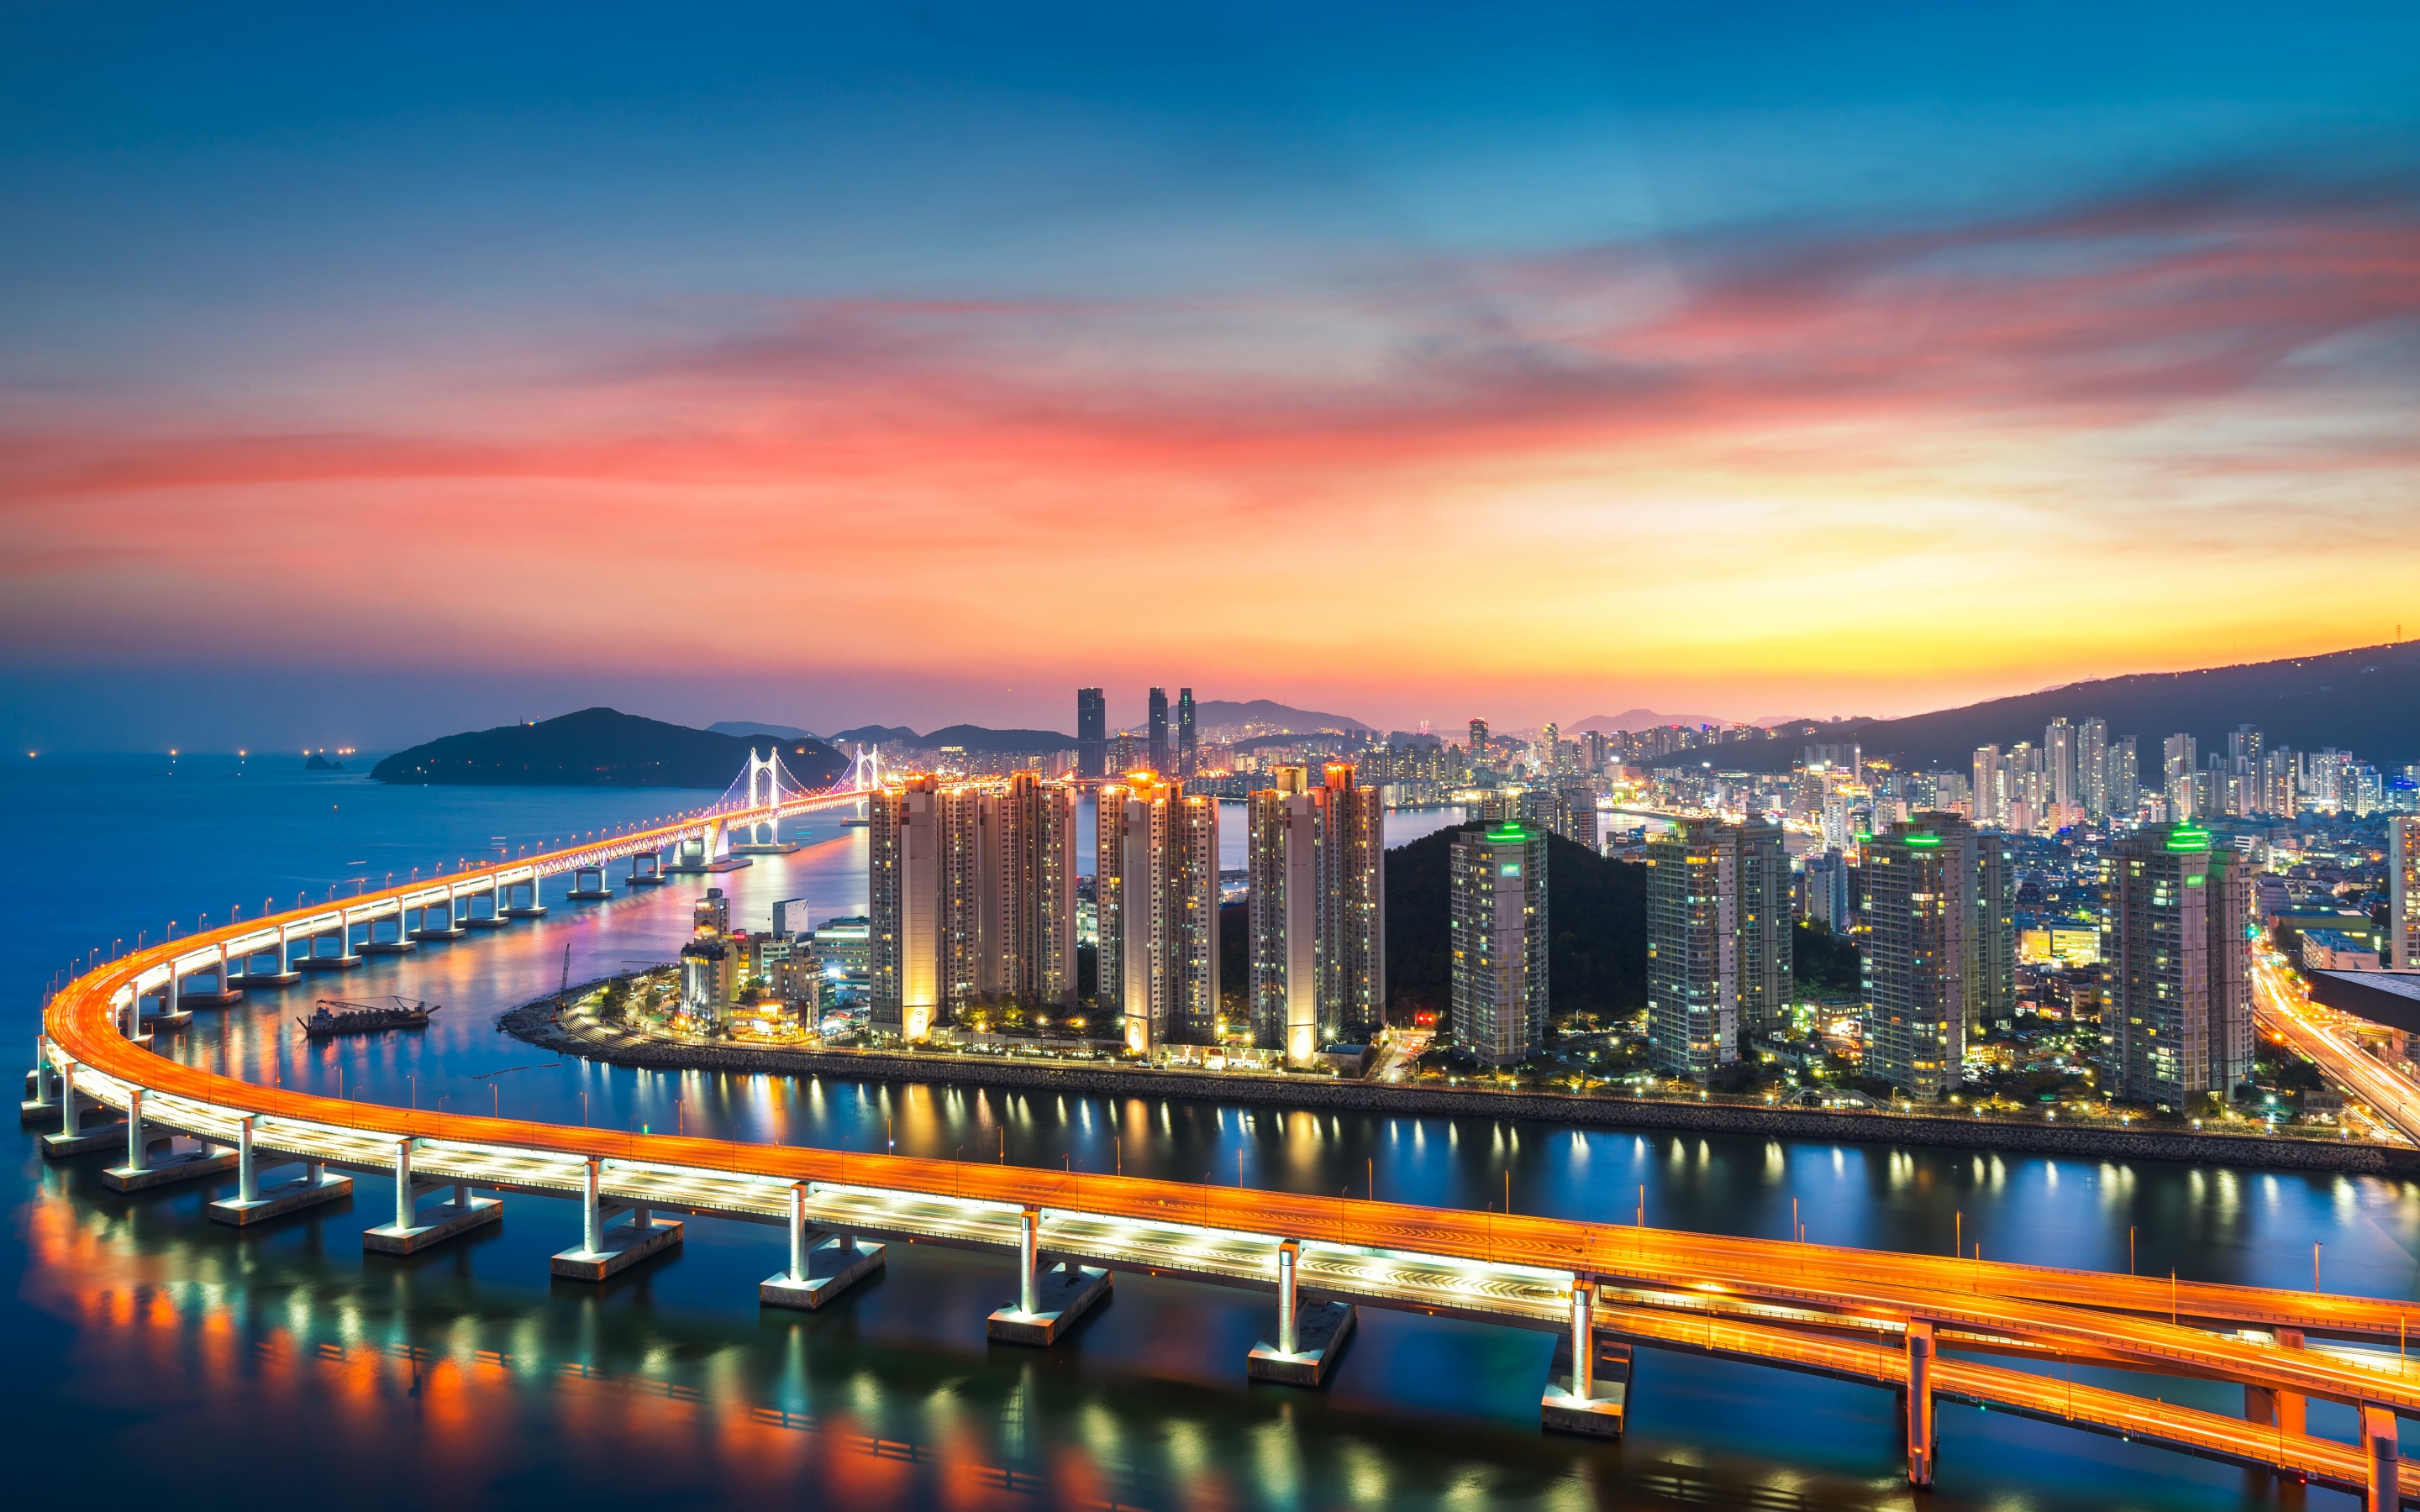 Busan 4K Wallpaper, Gwangan Bridge, City lights, Sunset, Harbor, Red